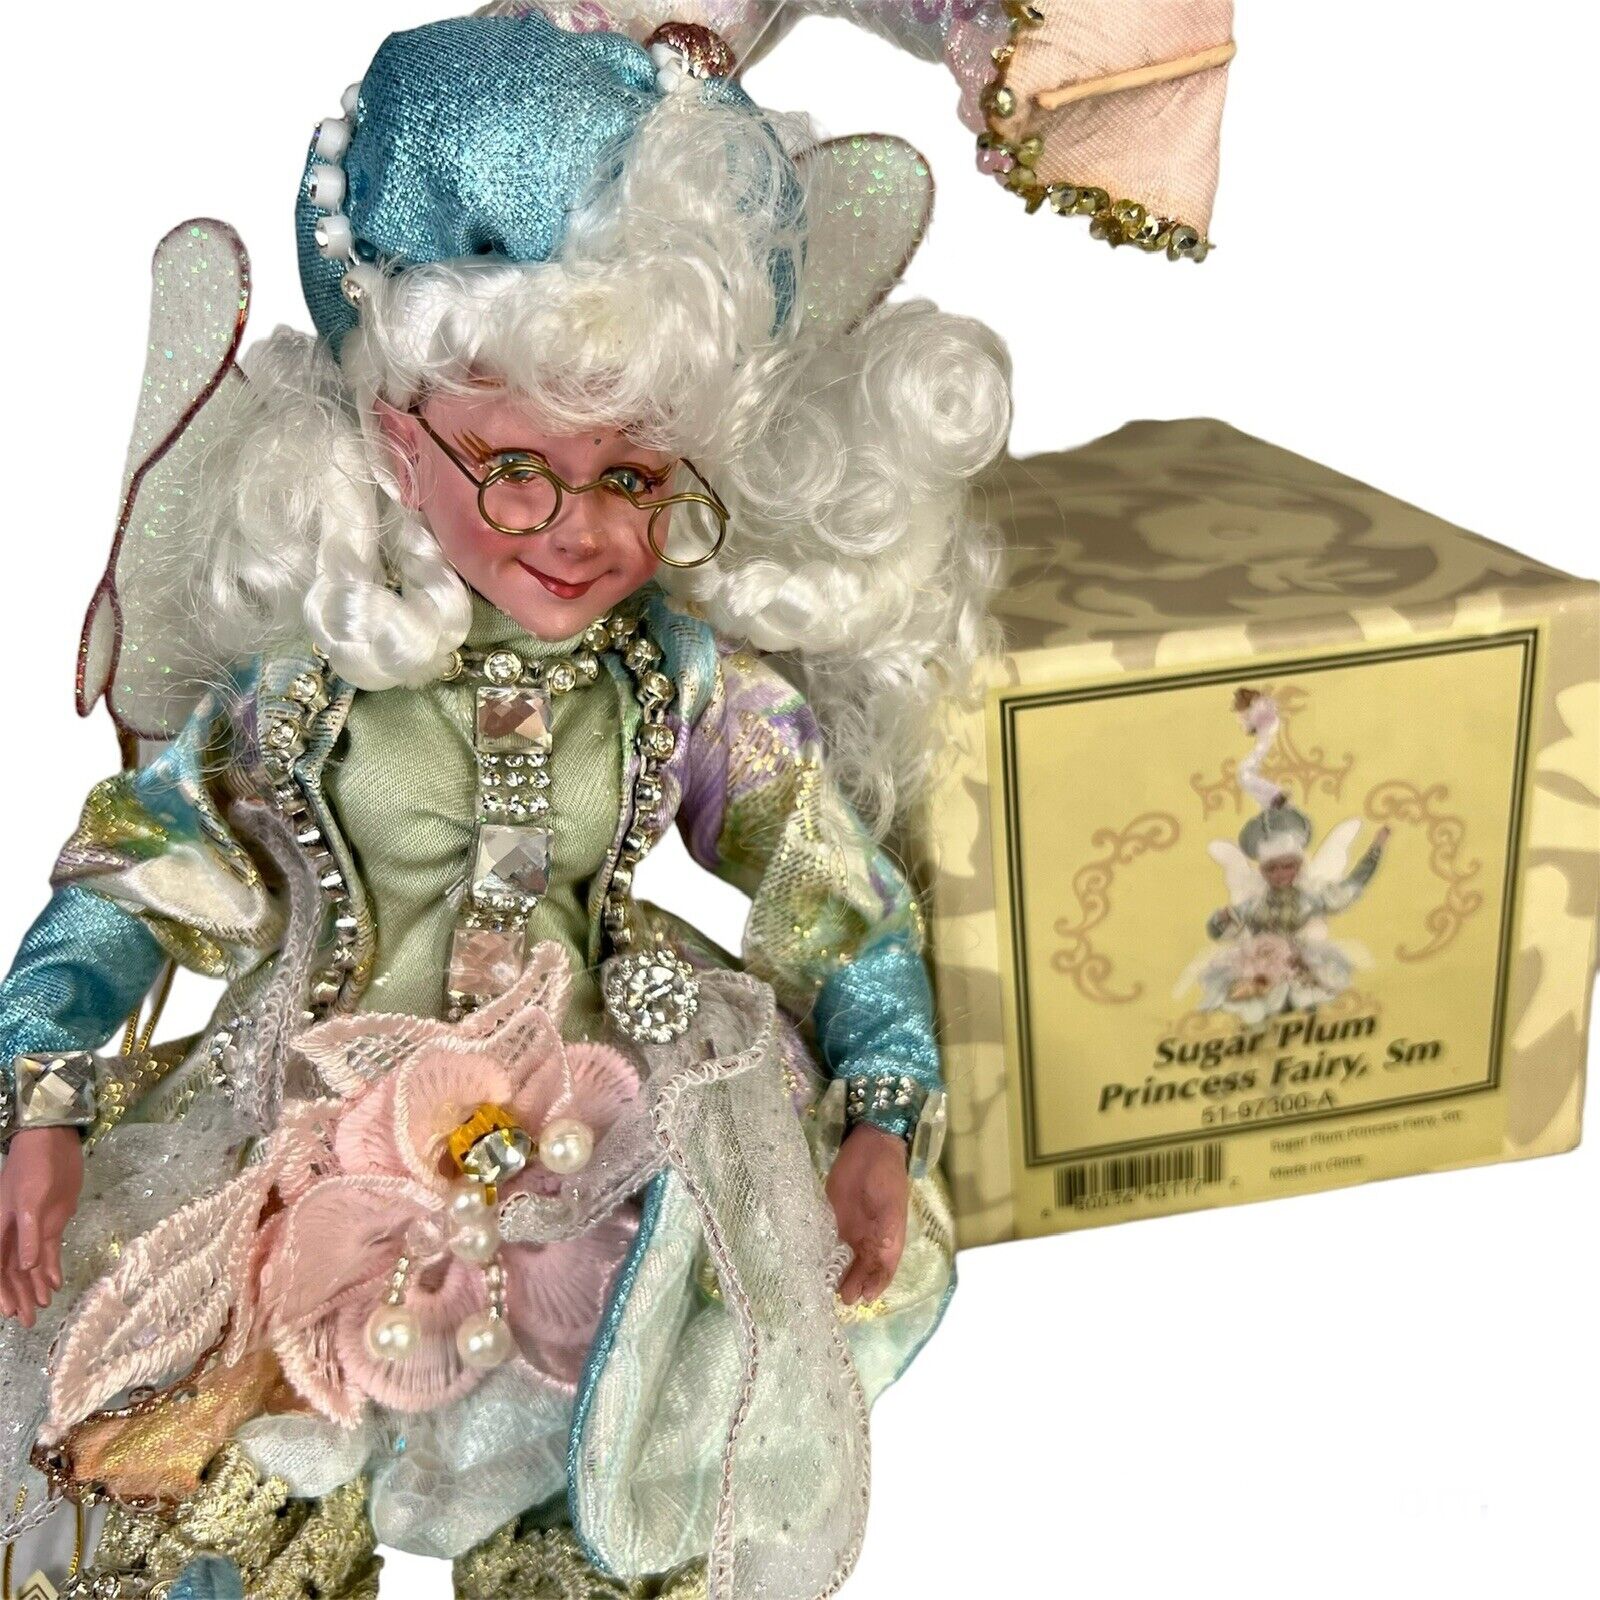 mark roberts sugar plum princess fairy limited edition small 51-97300-a 440/1000